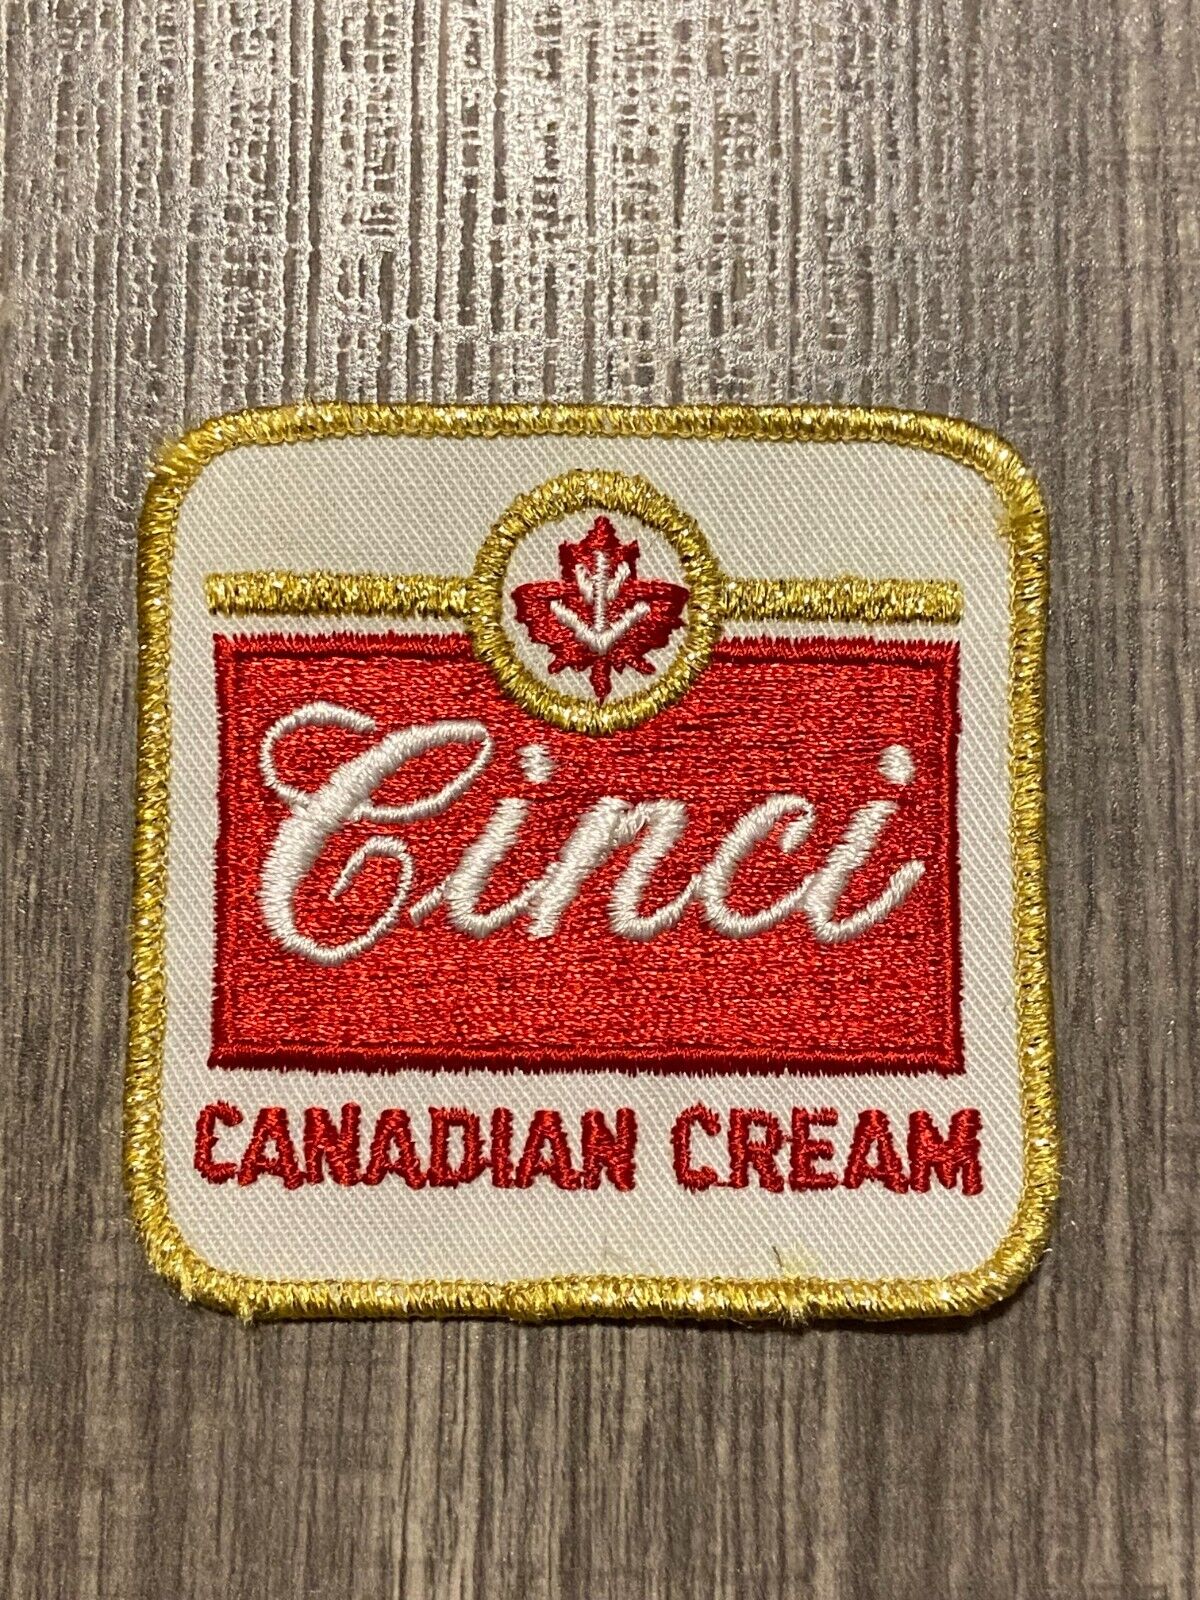 CINCI CANADIAN CREAM BEER PATCH -CANADA